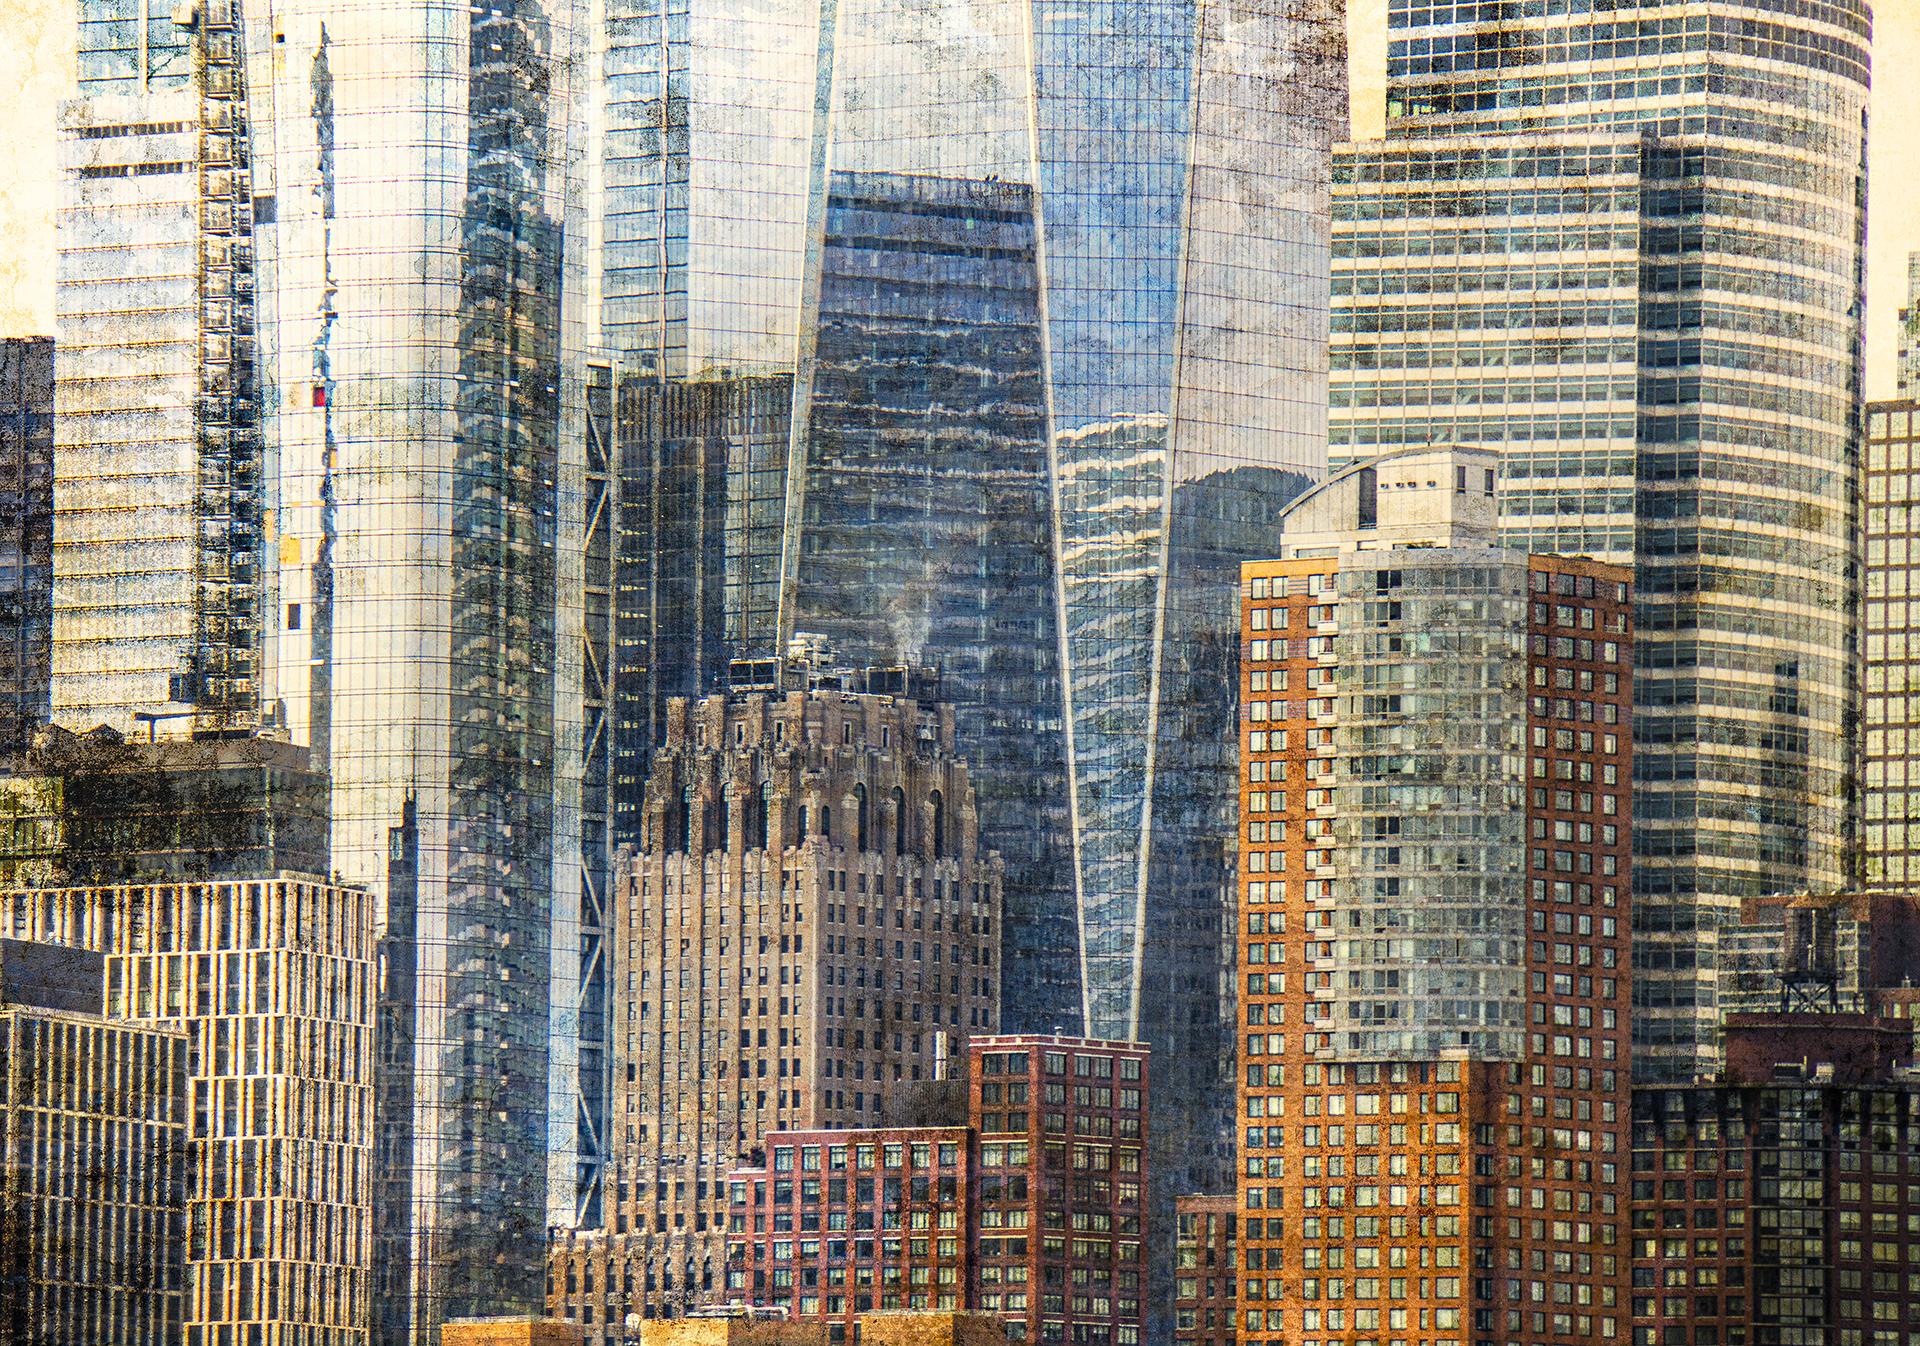 New York Photography Awards Winner - Collage City New York